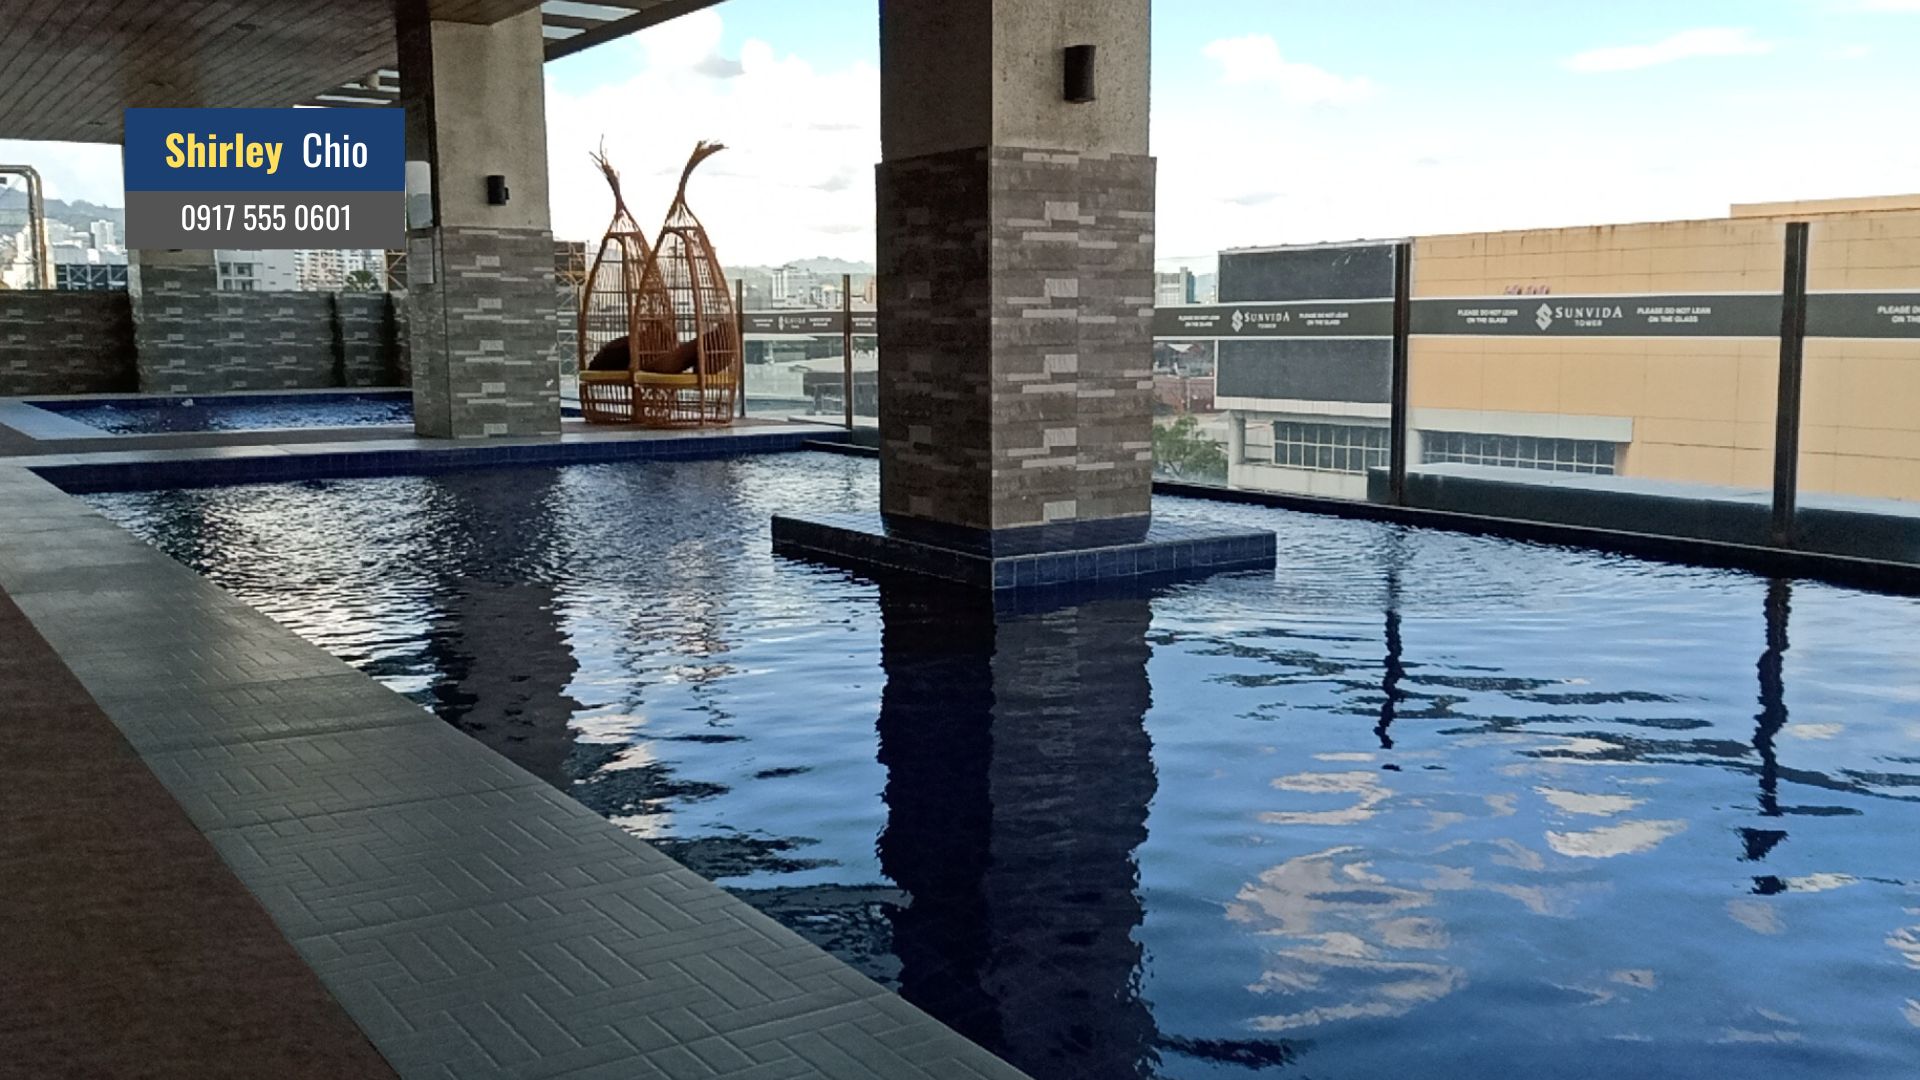 Sunvida Tower infinity pool amenities in Cebu